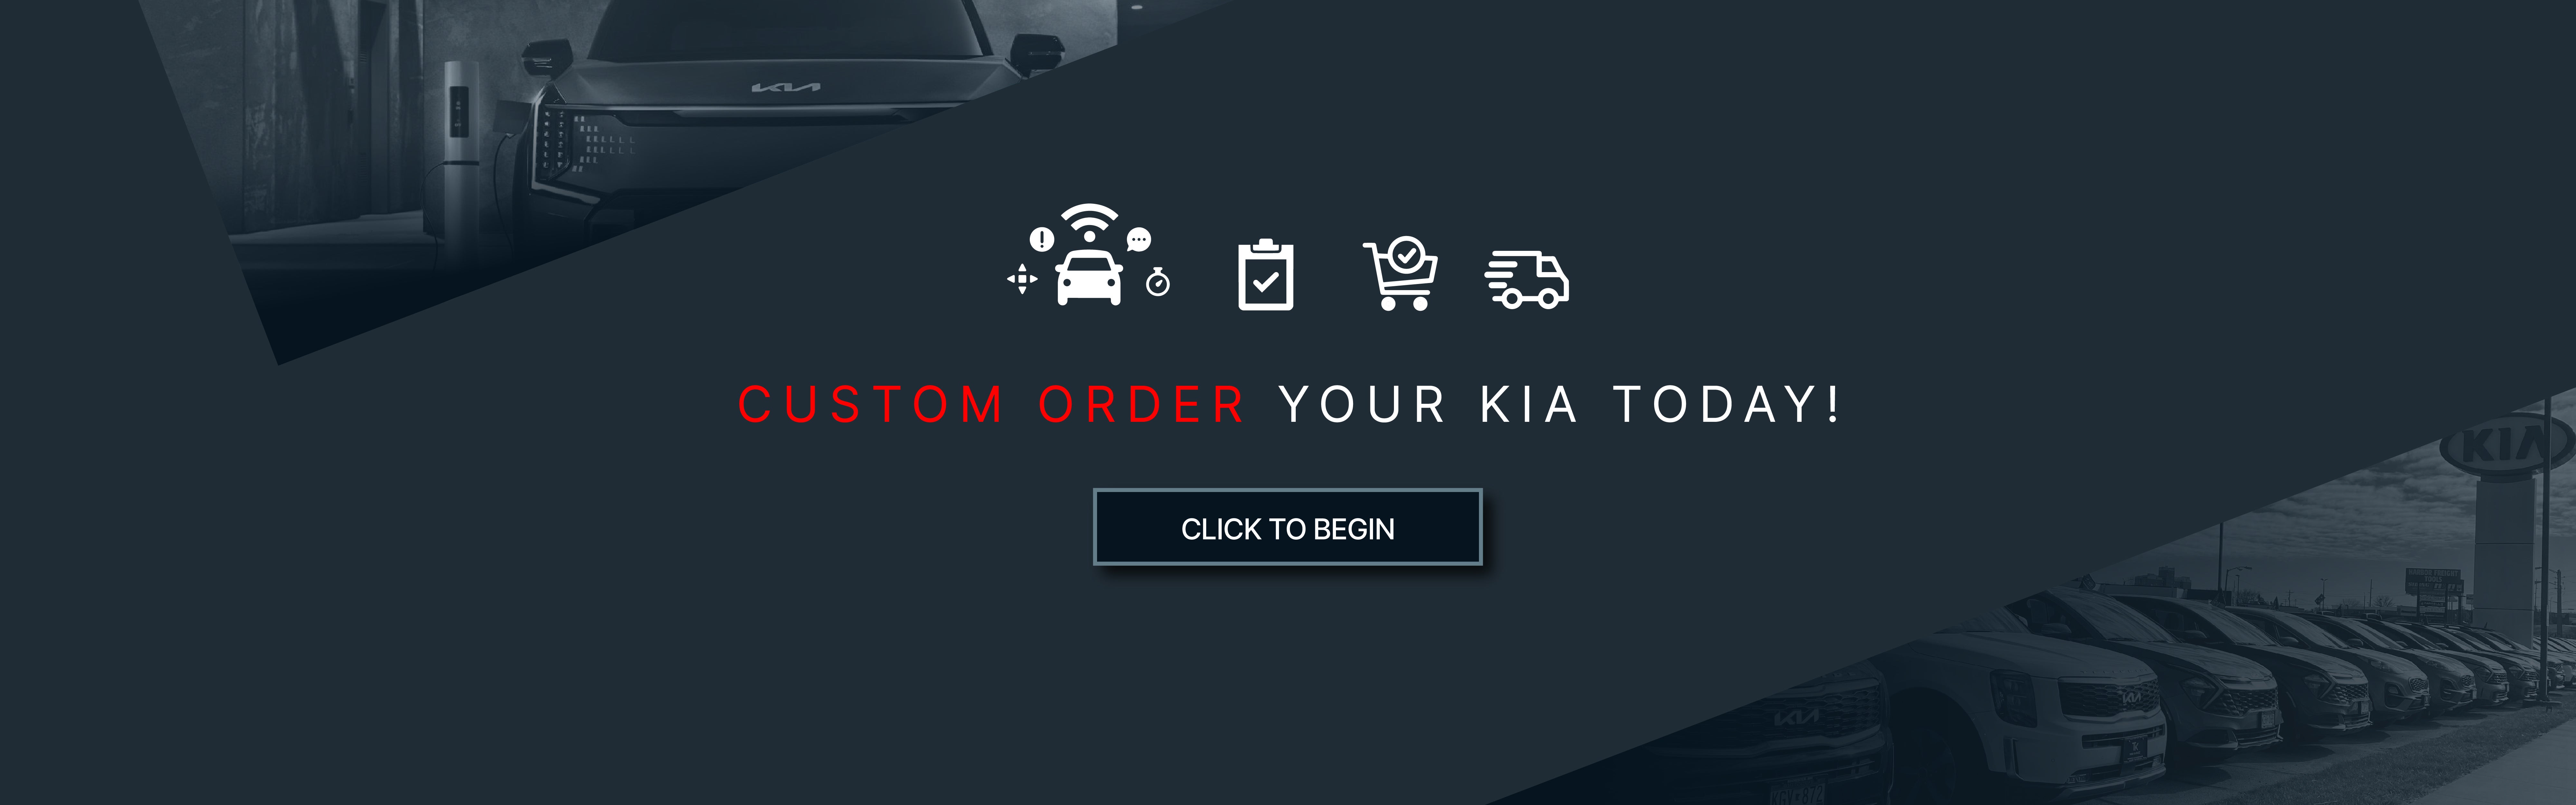 Custom Order Your Kia